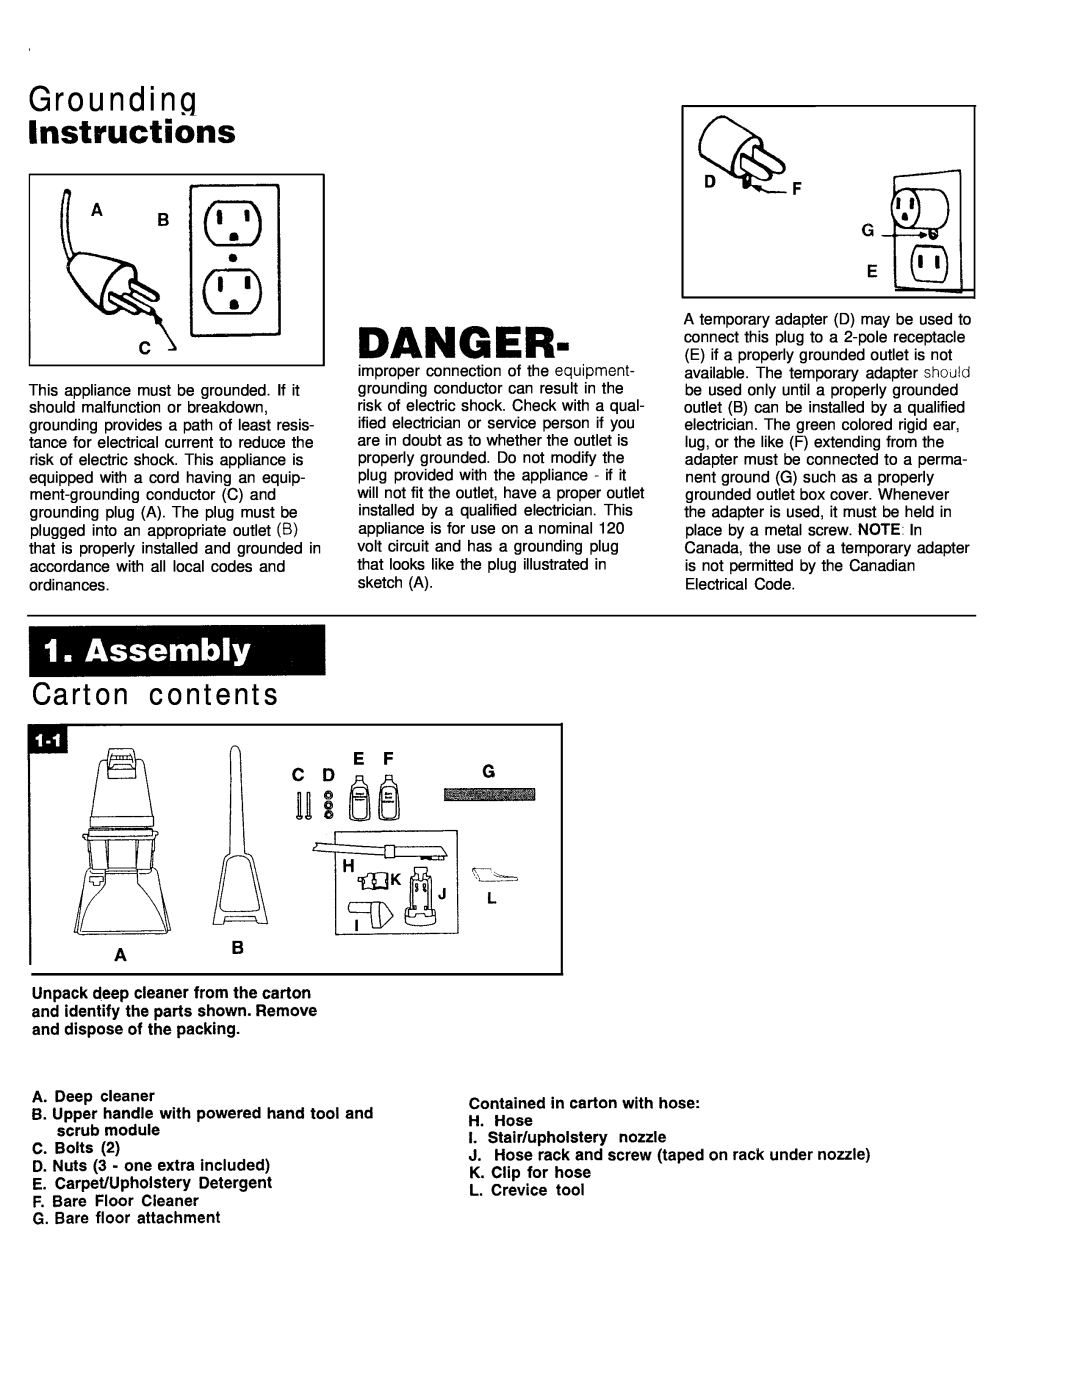 Hoover SteamVac" LS manual Grounding Instructihs, Carton contents, Danger 